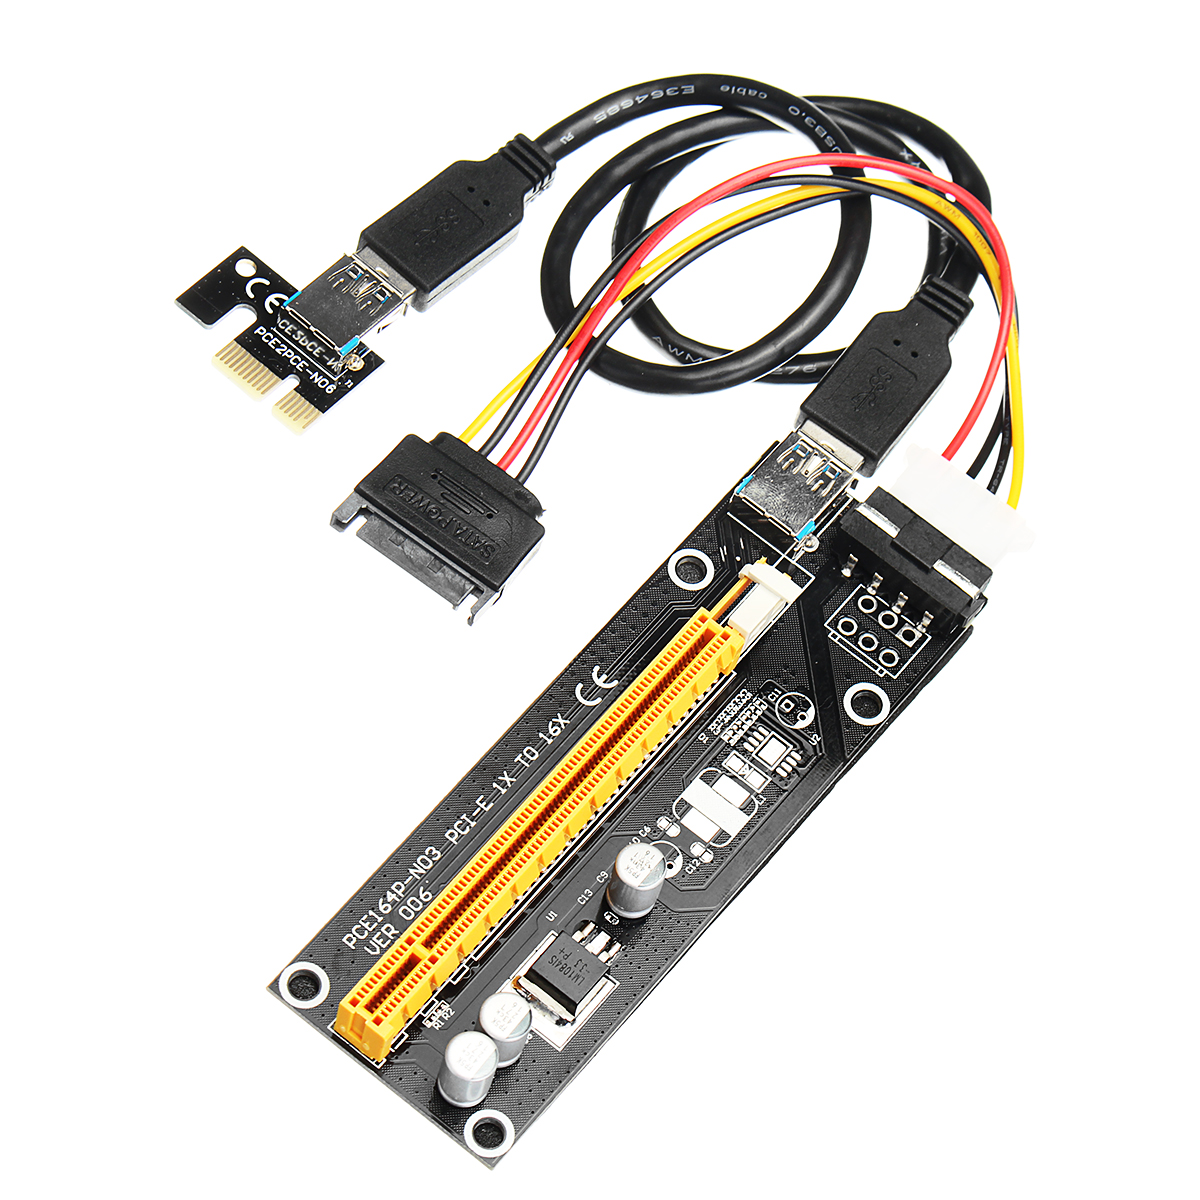 

VER006 BTC ETH Pcie PCI-E 1x 16x Extender Riser Card Адаптер расширения USB 3.0 Mining Cable